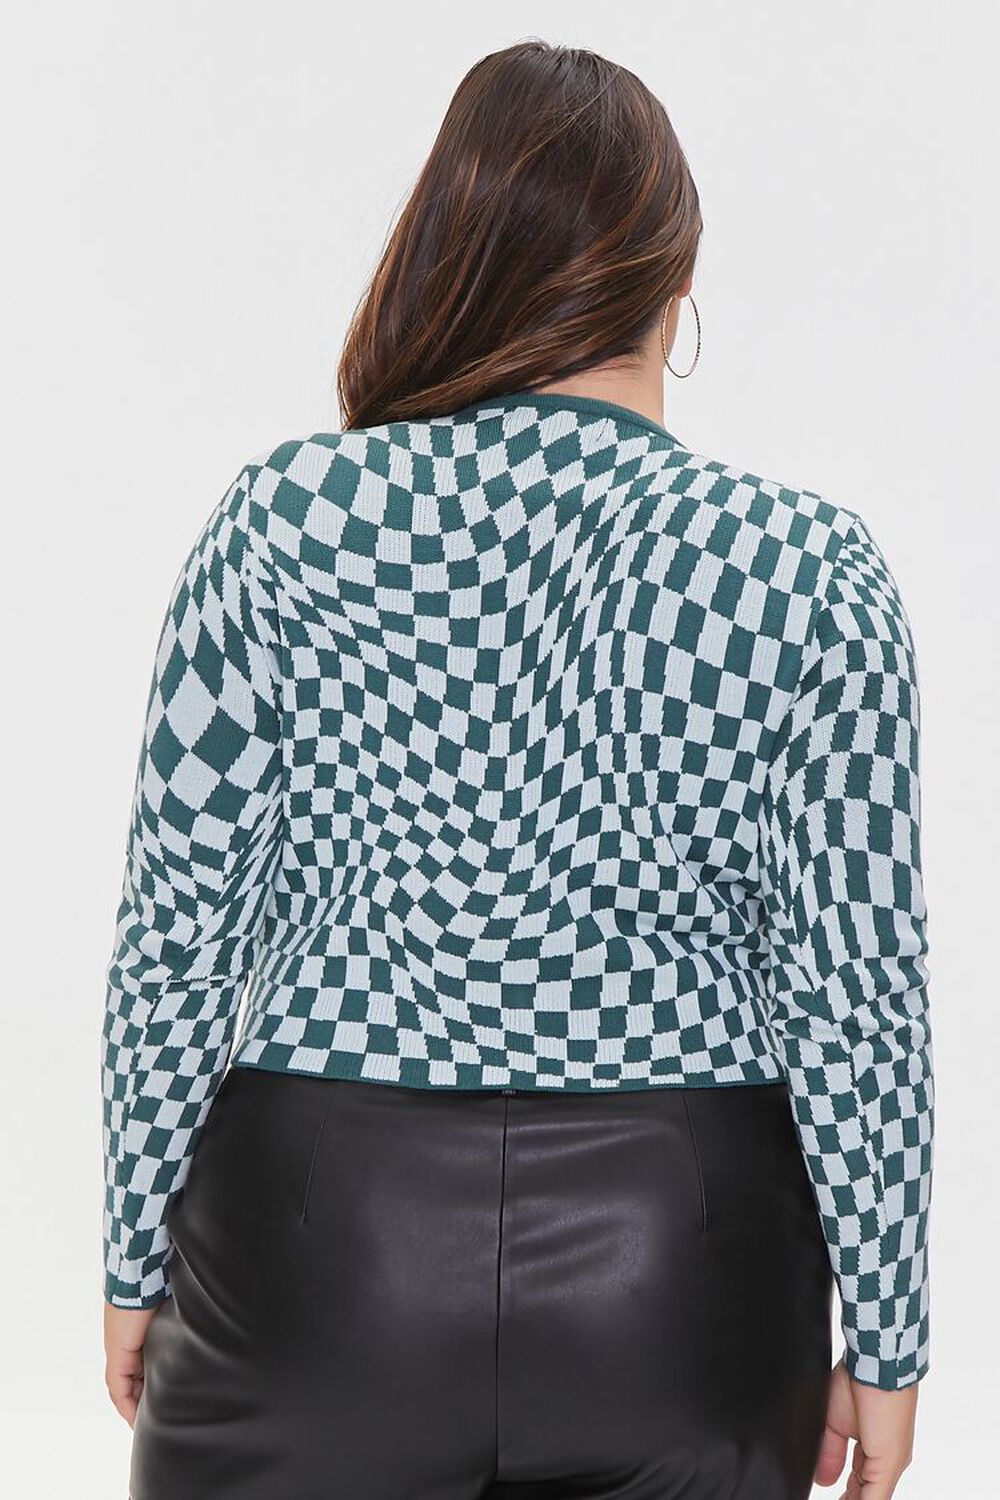 GREEN/MULTI Plus Size Checkered Sweater, image 3